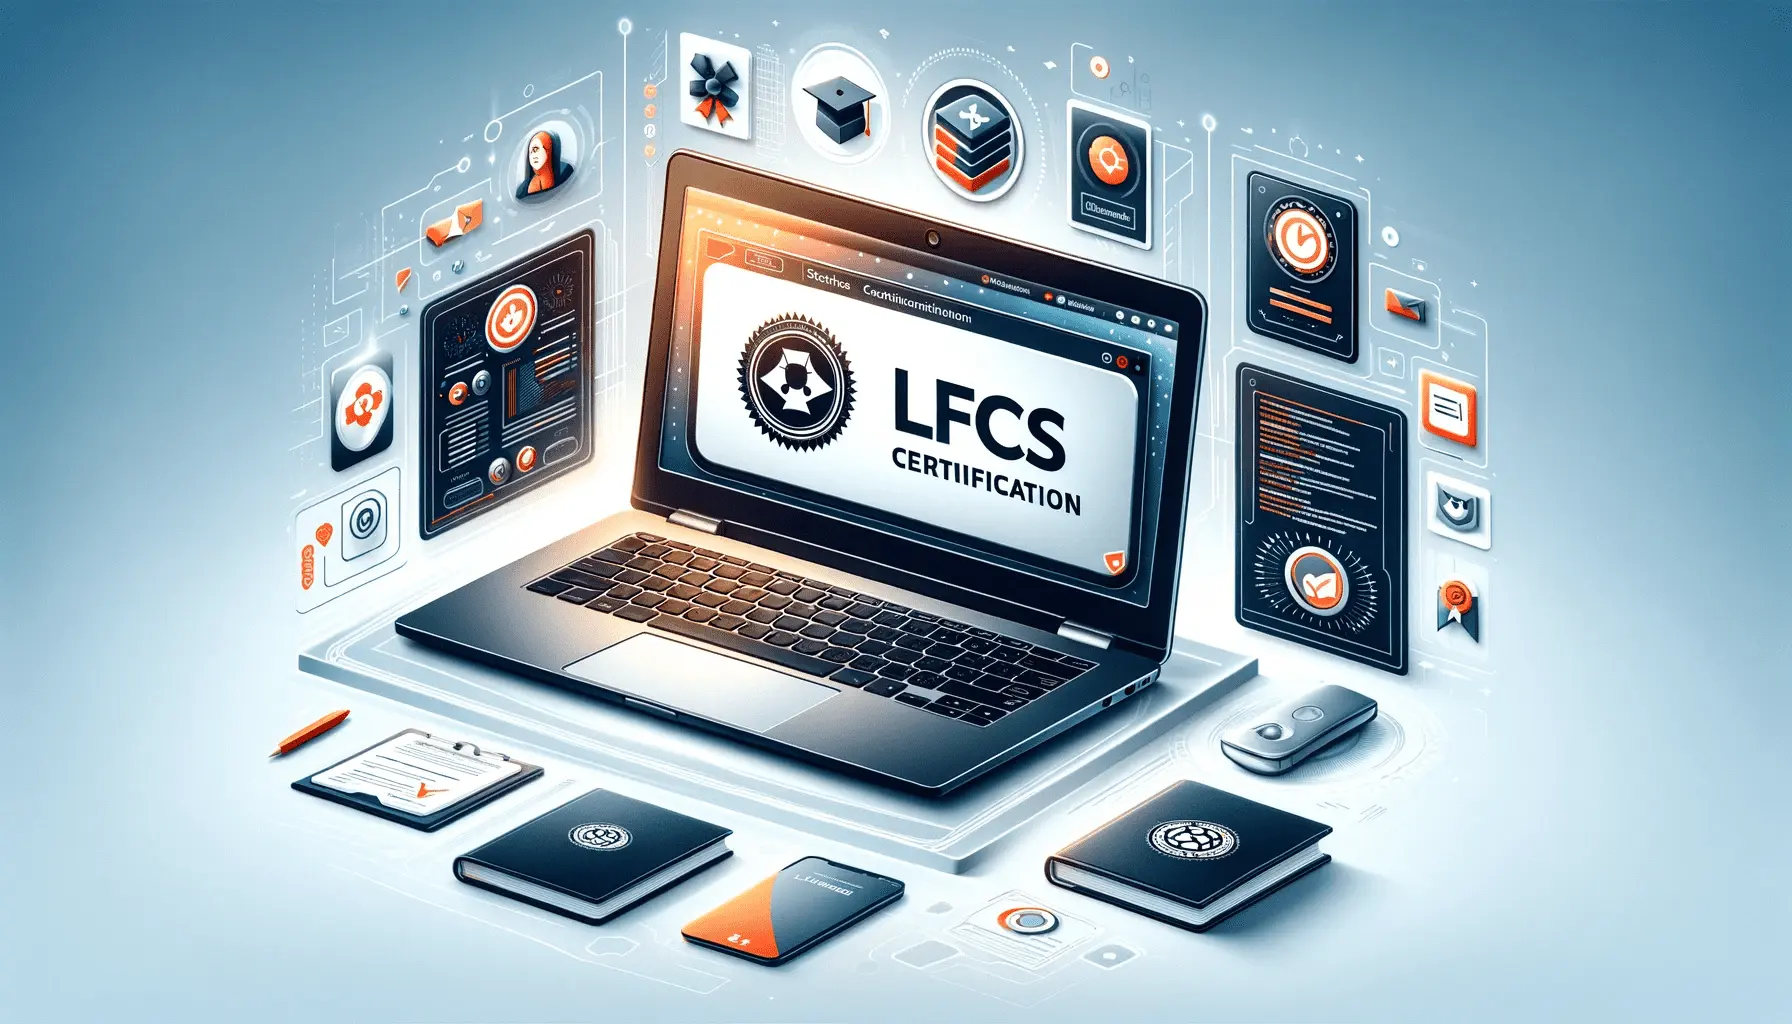 LFCS Certification